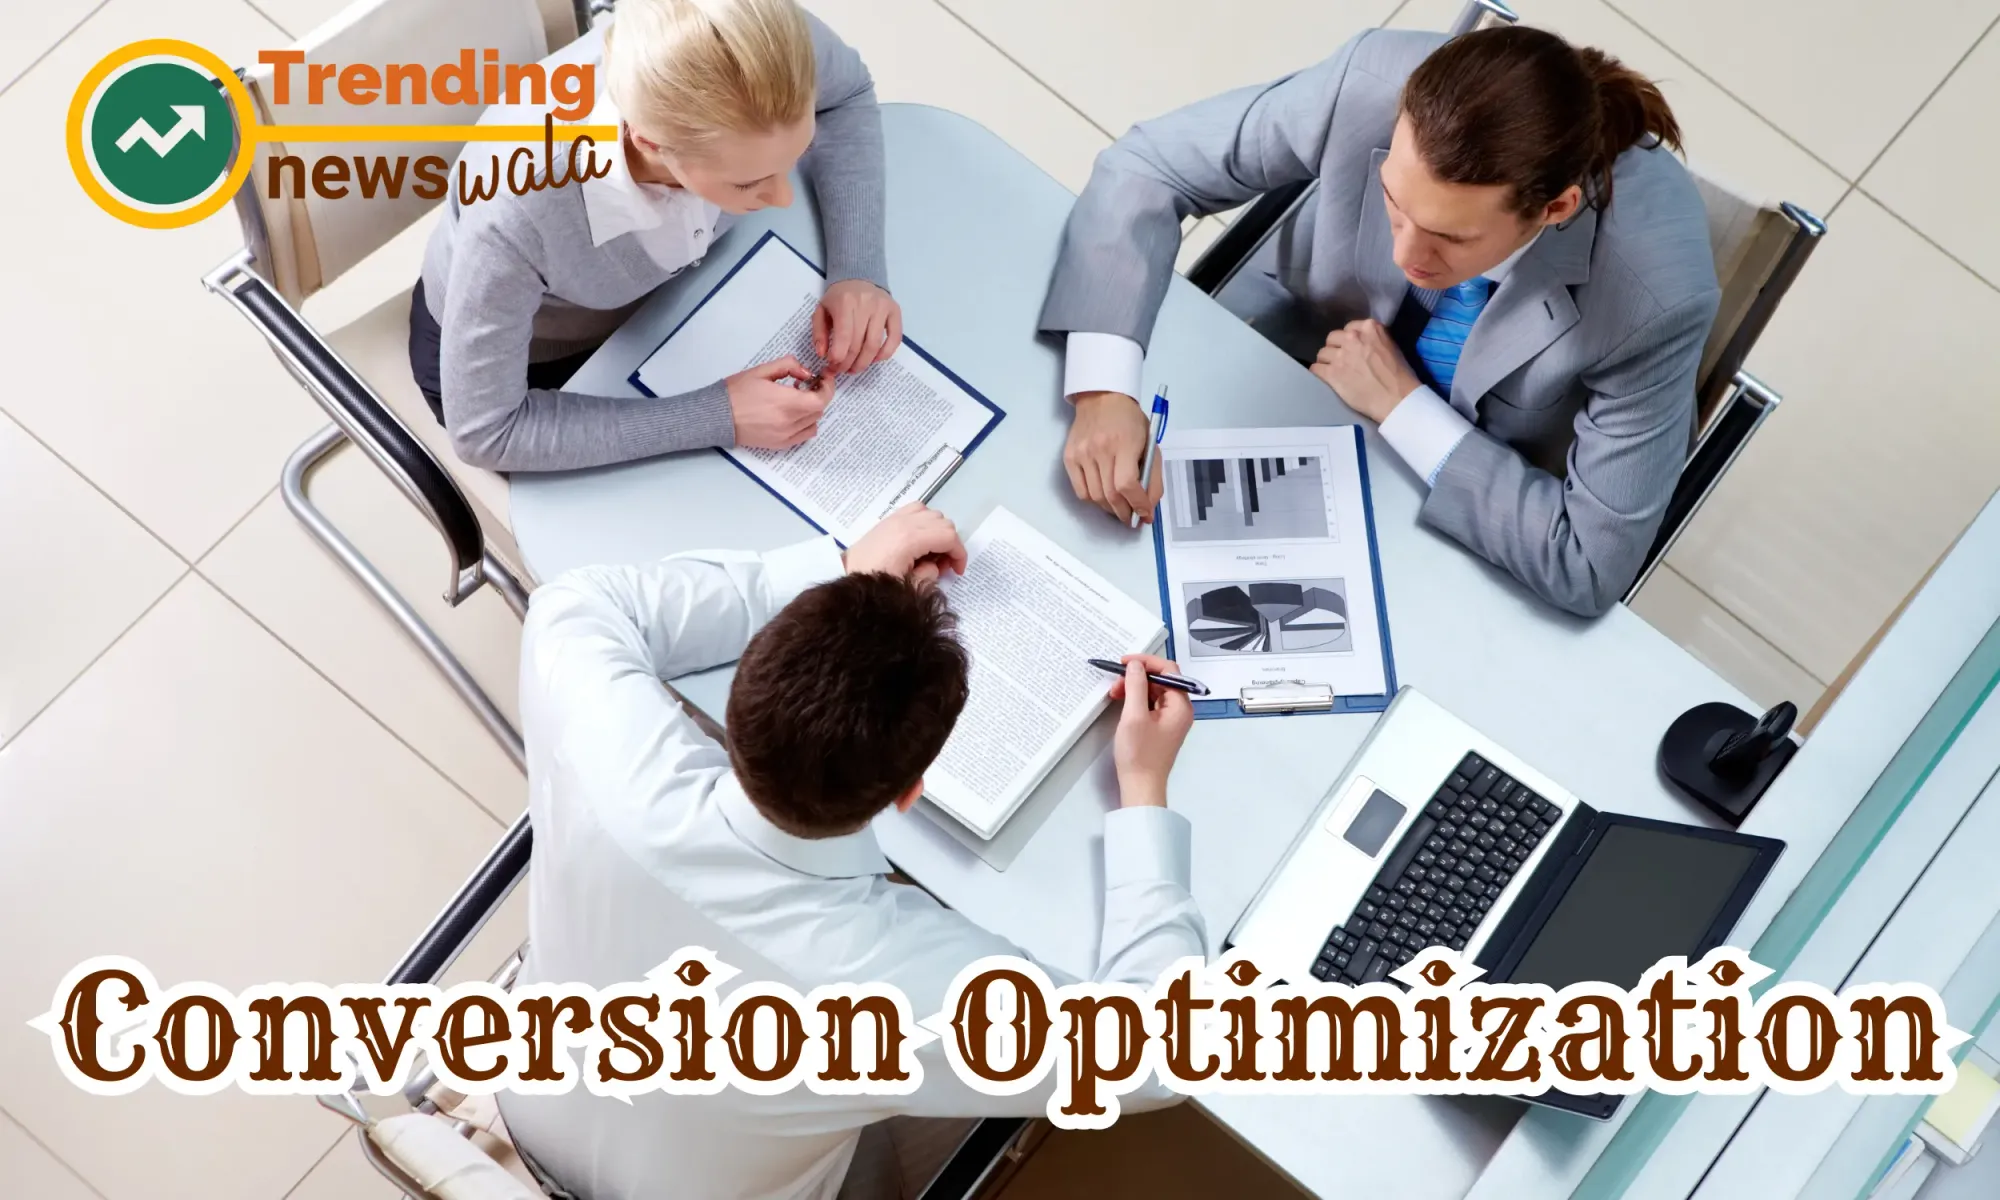 Conversion optimization, also known as conversion rate optimization (CRO)